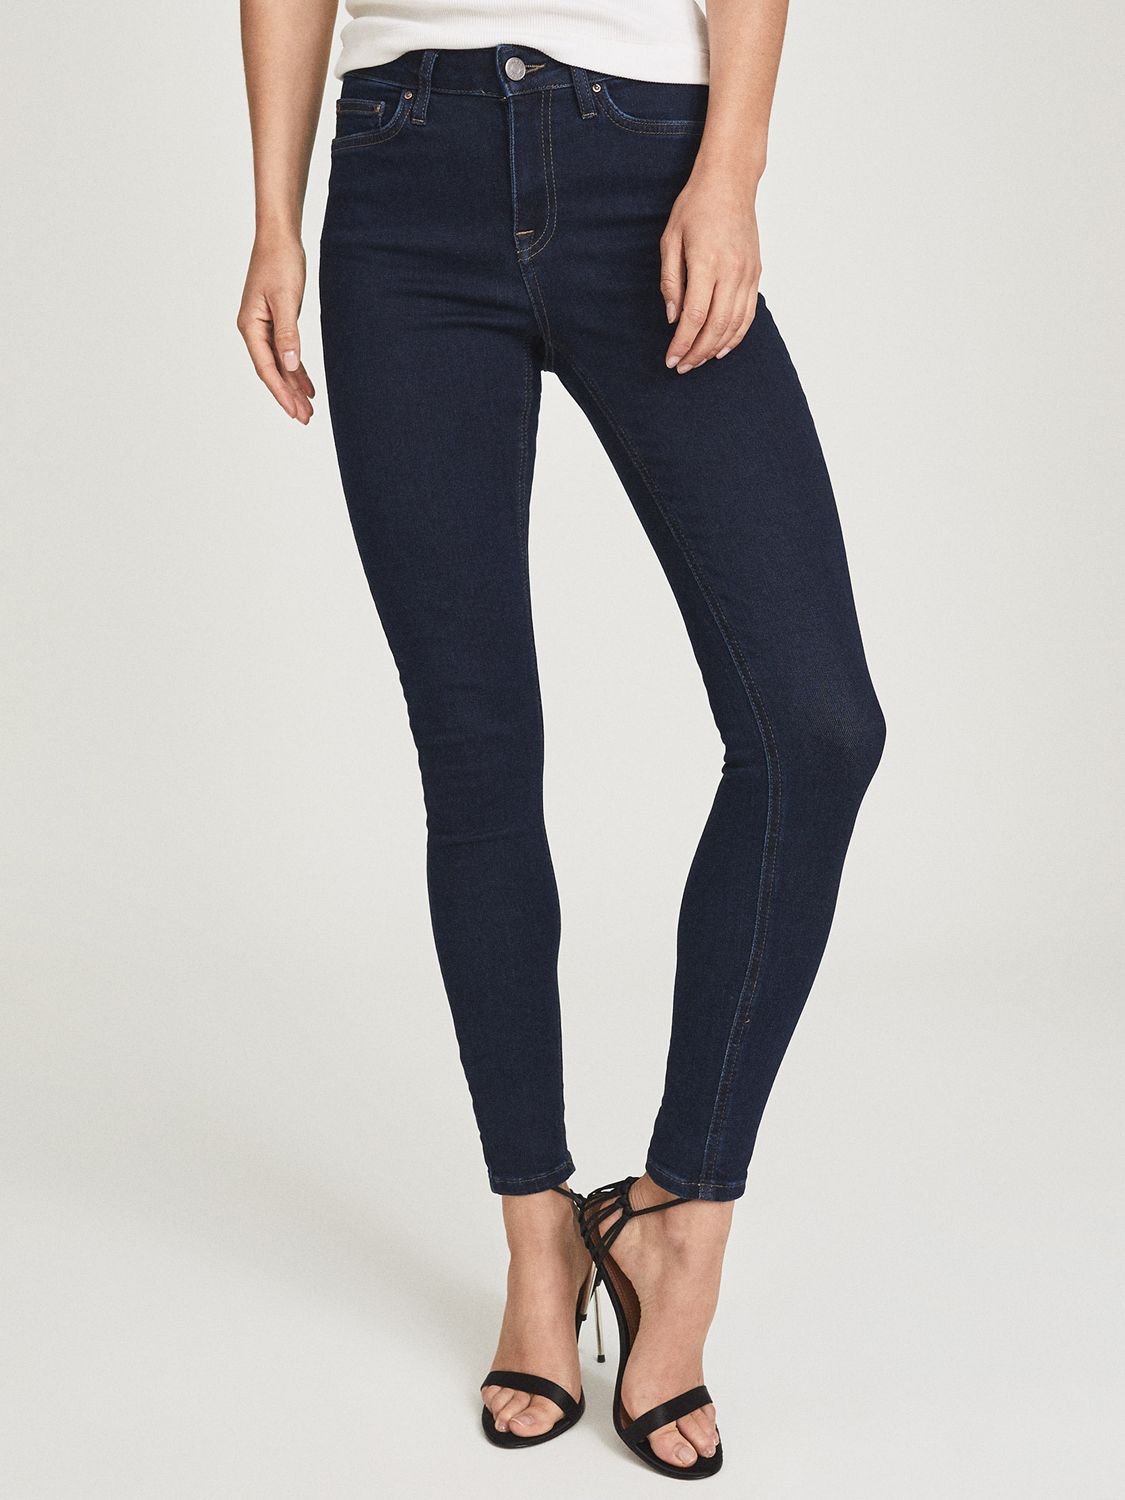 Reiss Lux Skinny Jeans, Indigo at John Lewis & Partners